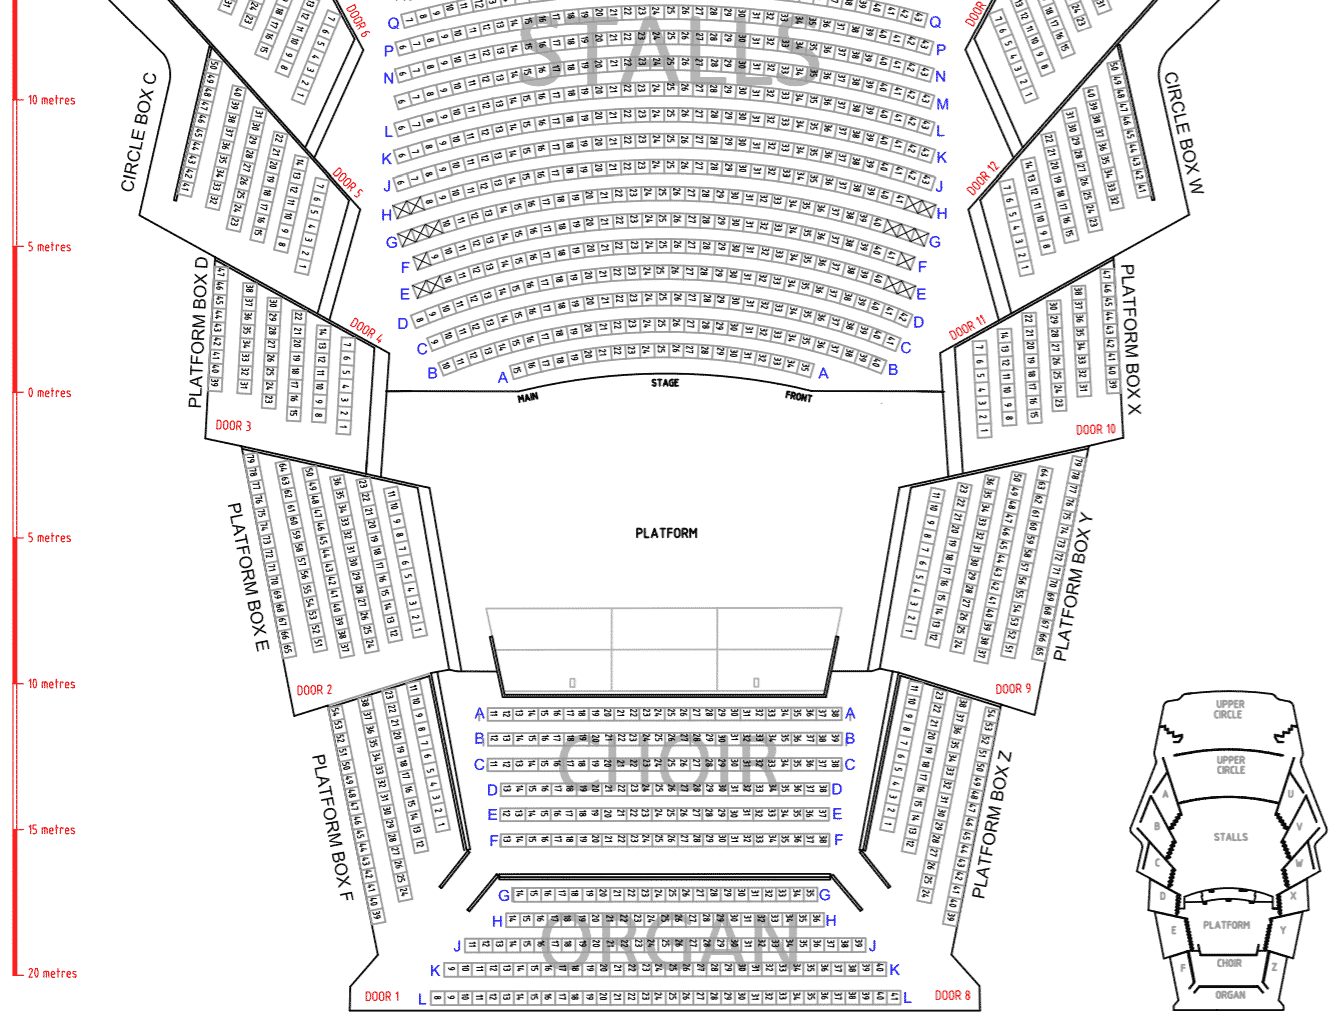 Opera House Studio Seating Map - Image to u